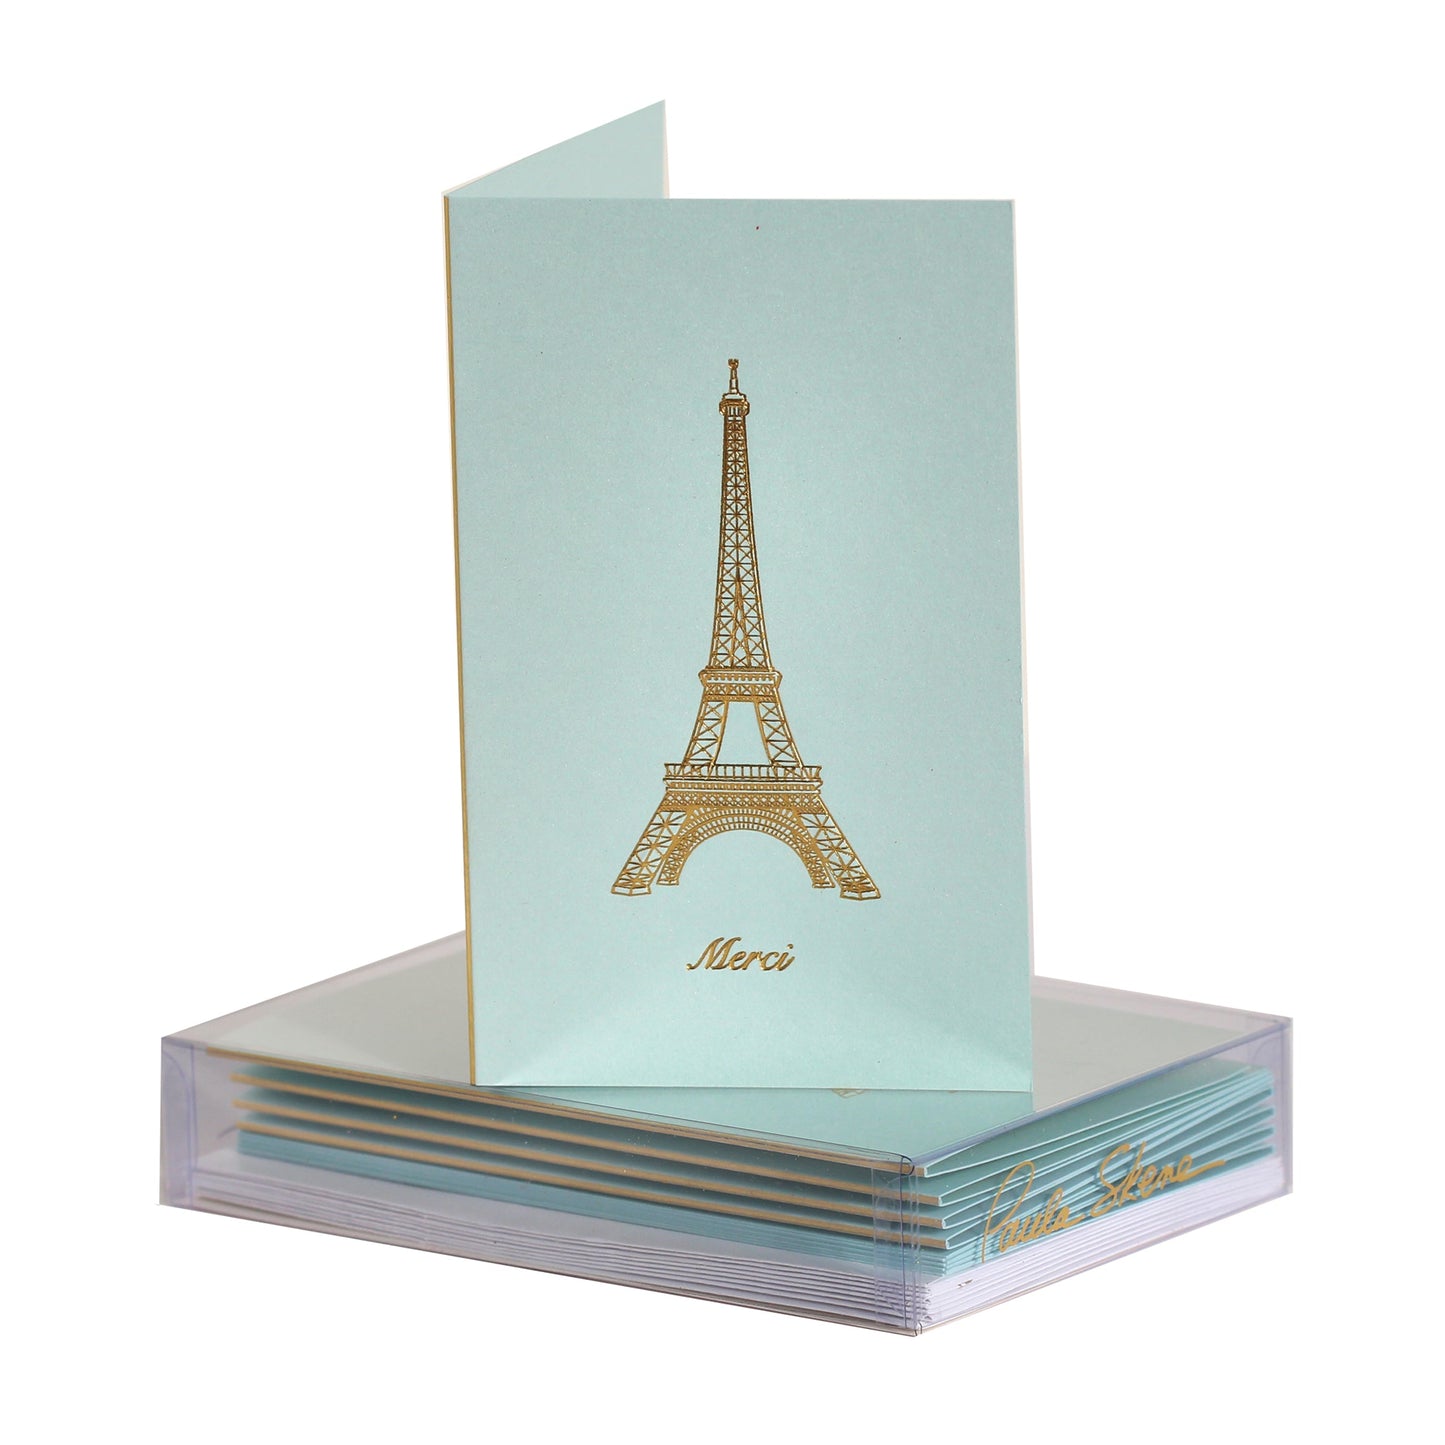 Eiffel Tower 'Merci' Mini Note Cards, Set of 8